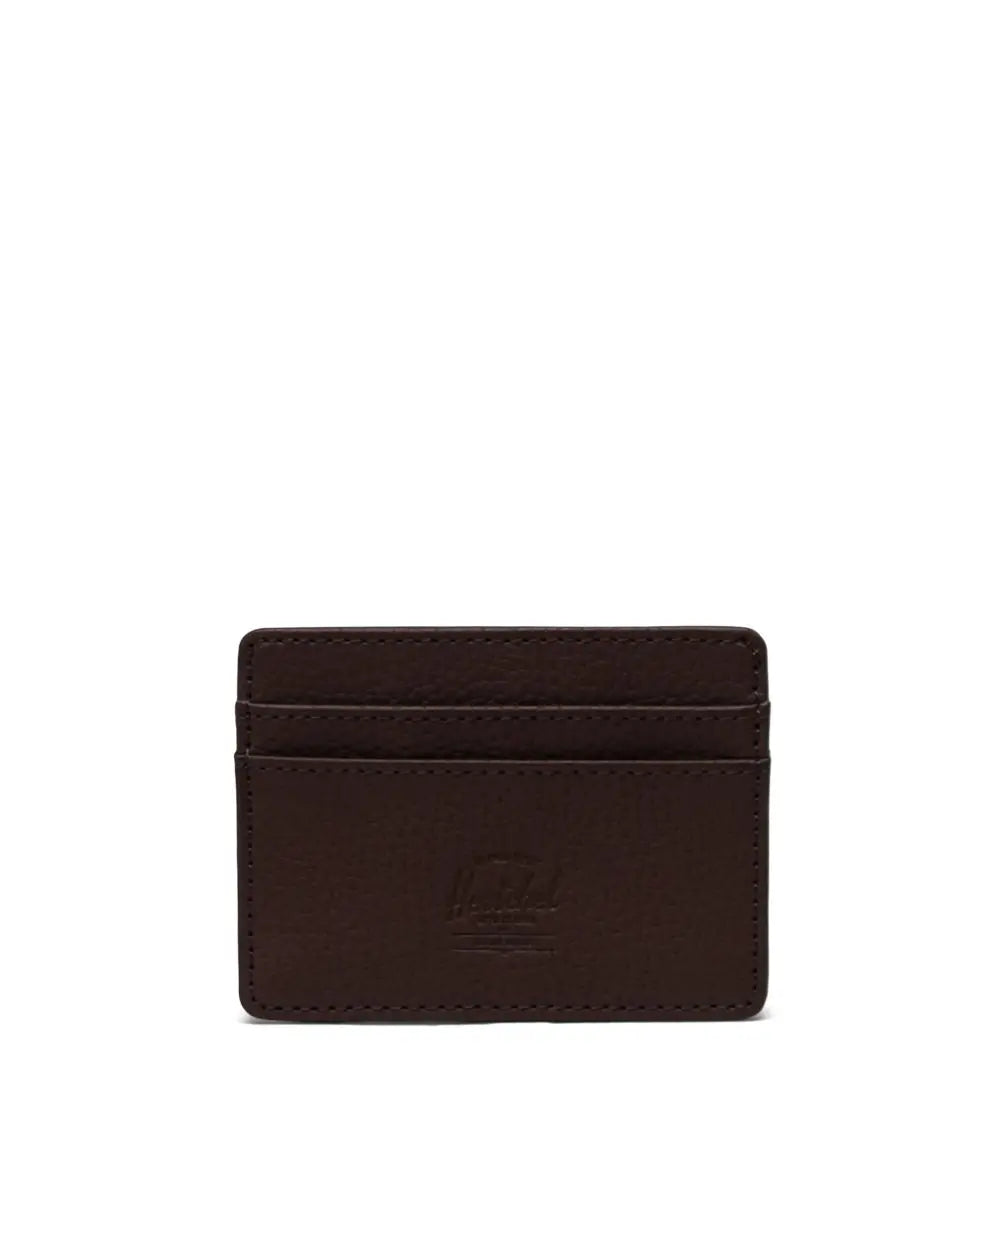 Herschel Supply Co. Charlie Leather Wallet - Chicory Coffee - Sun Diego Boardshop